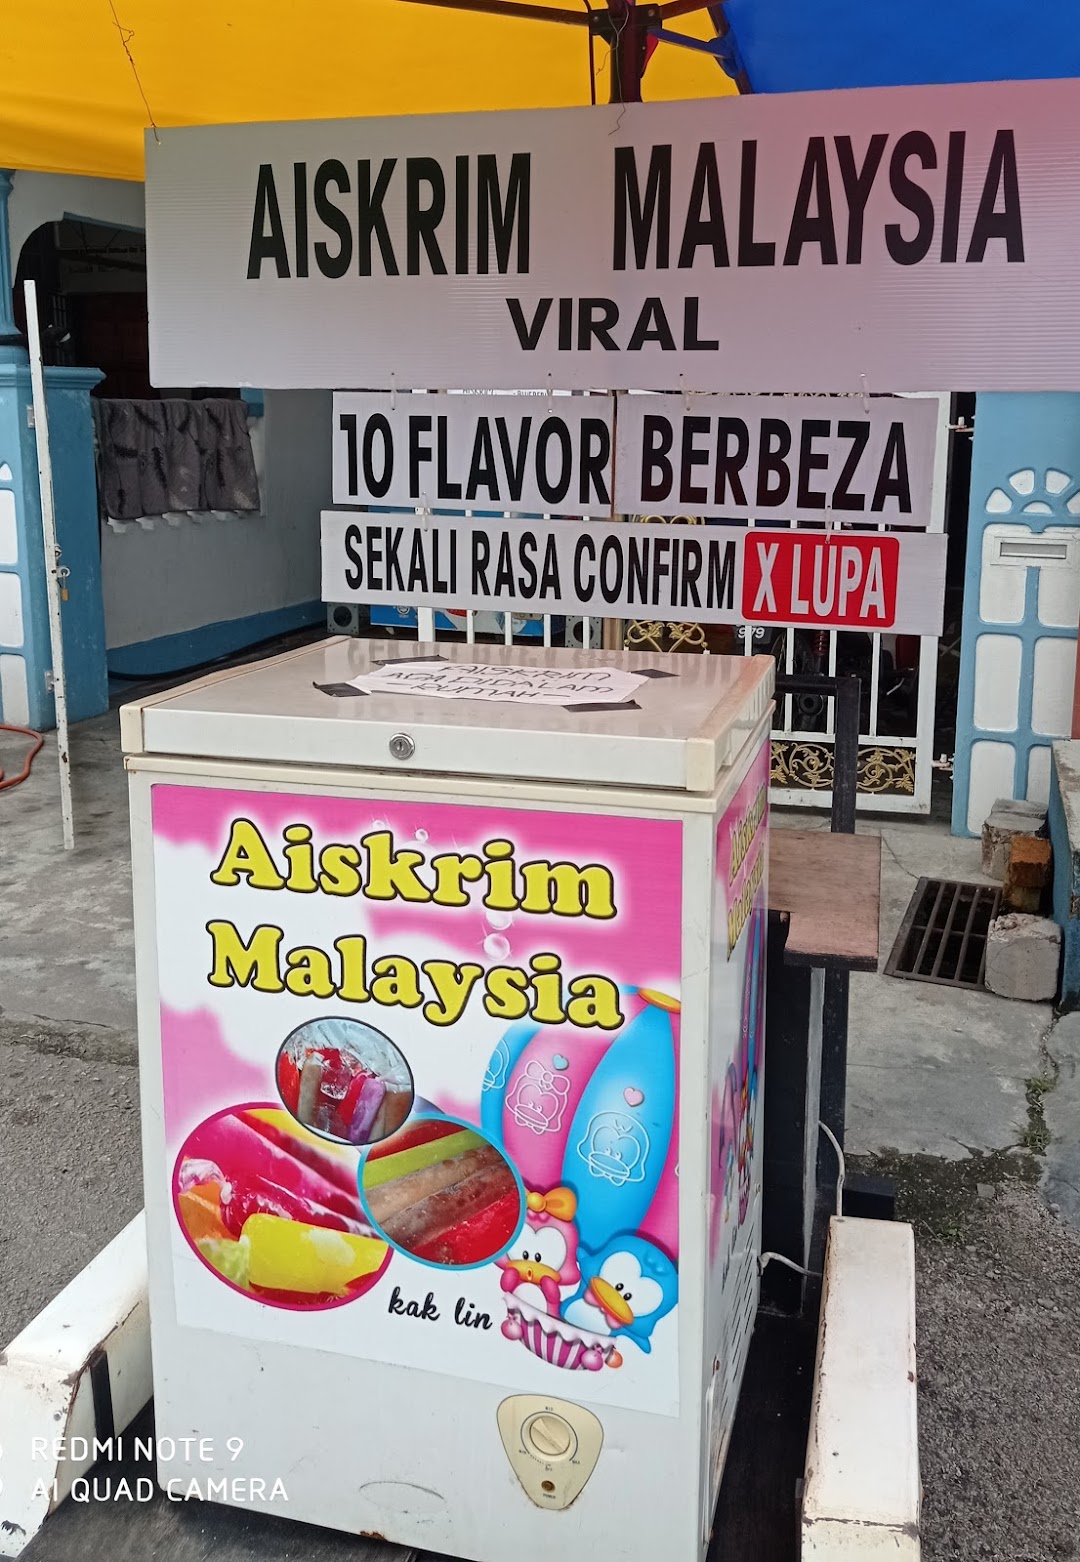 Aiskrim Malaysia Viral